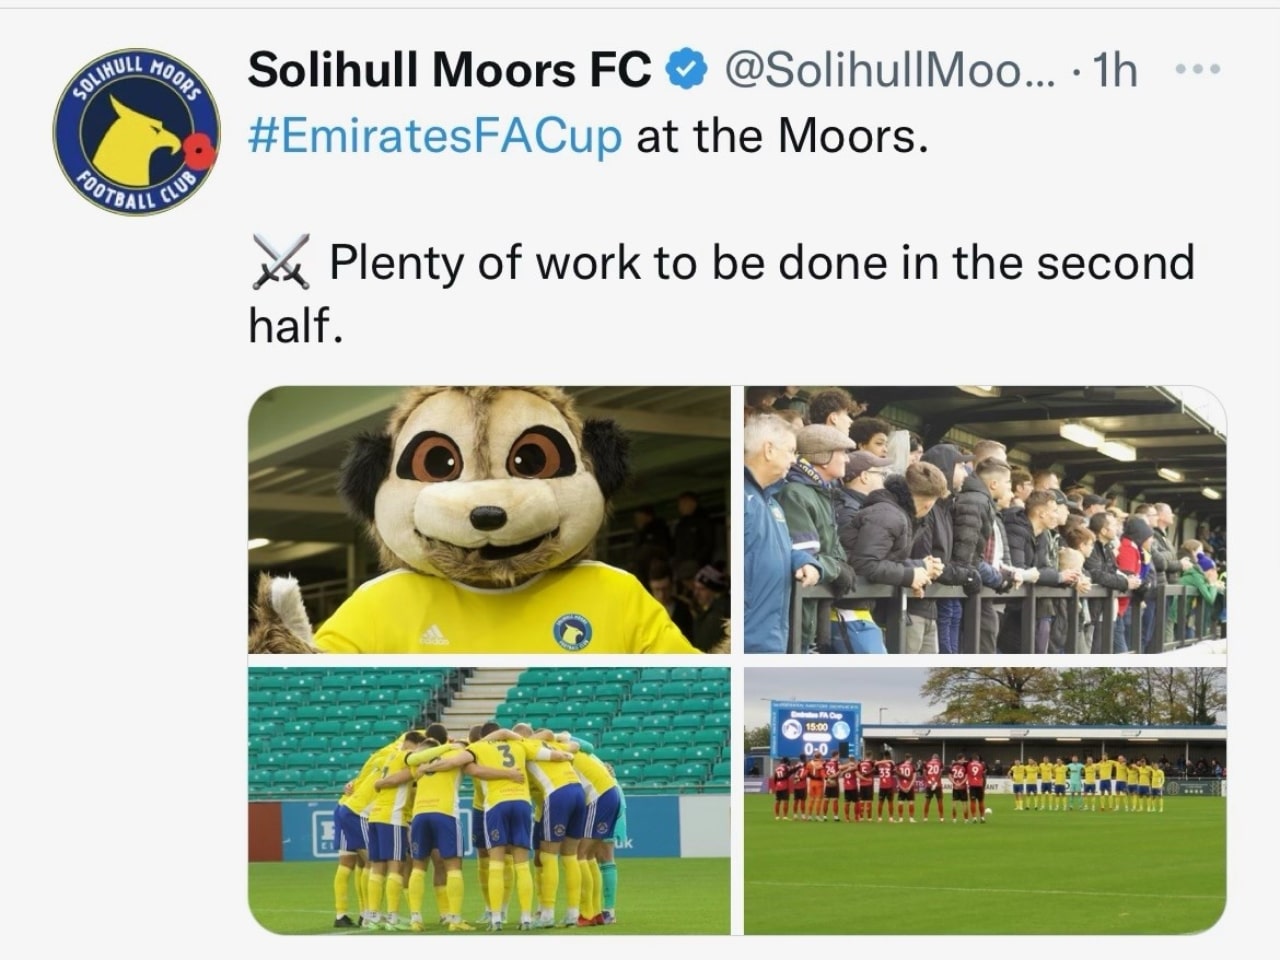 Solihull Moors FC at the Moors